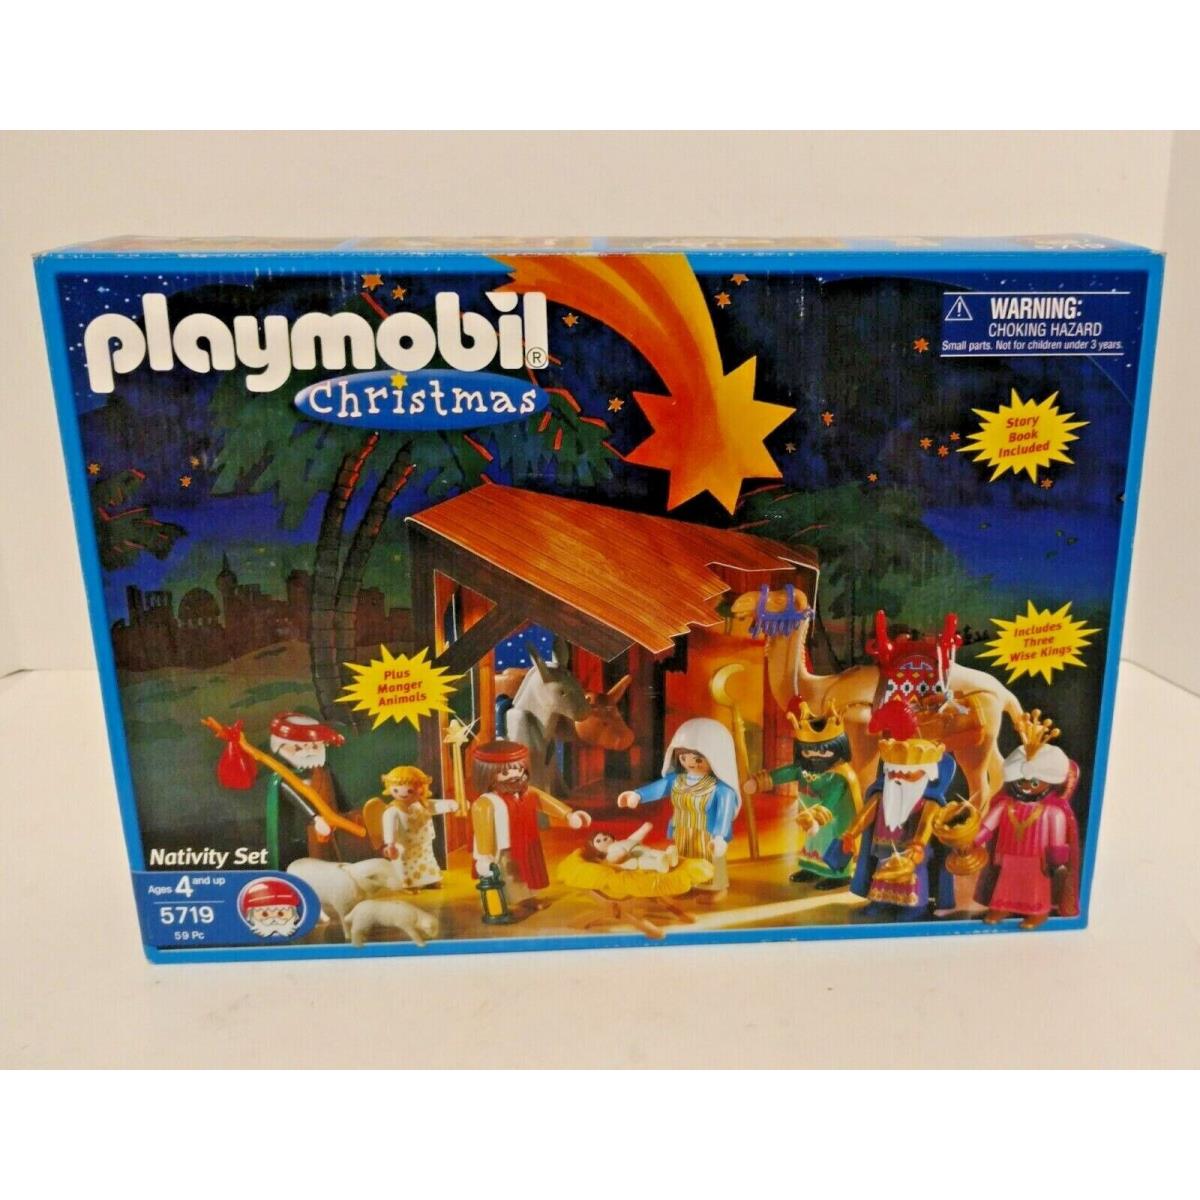 Playmobil Christmas Nativity Play Set 5719 Retired